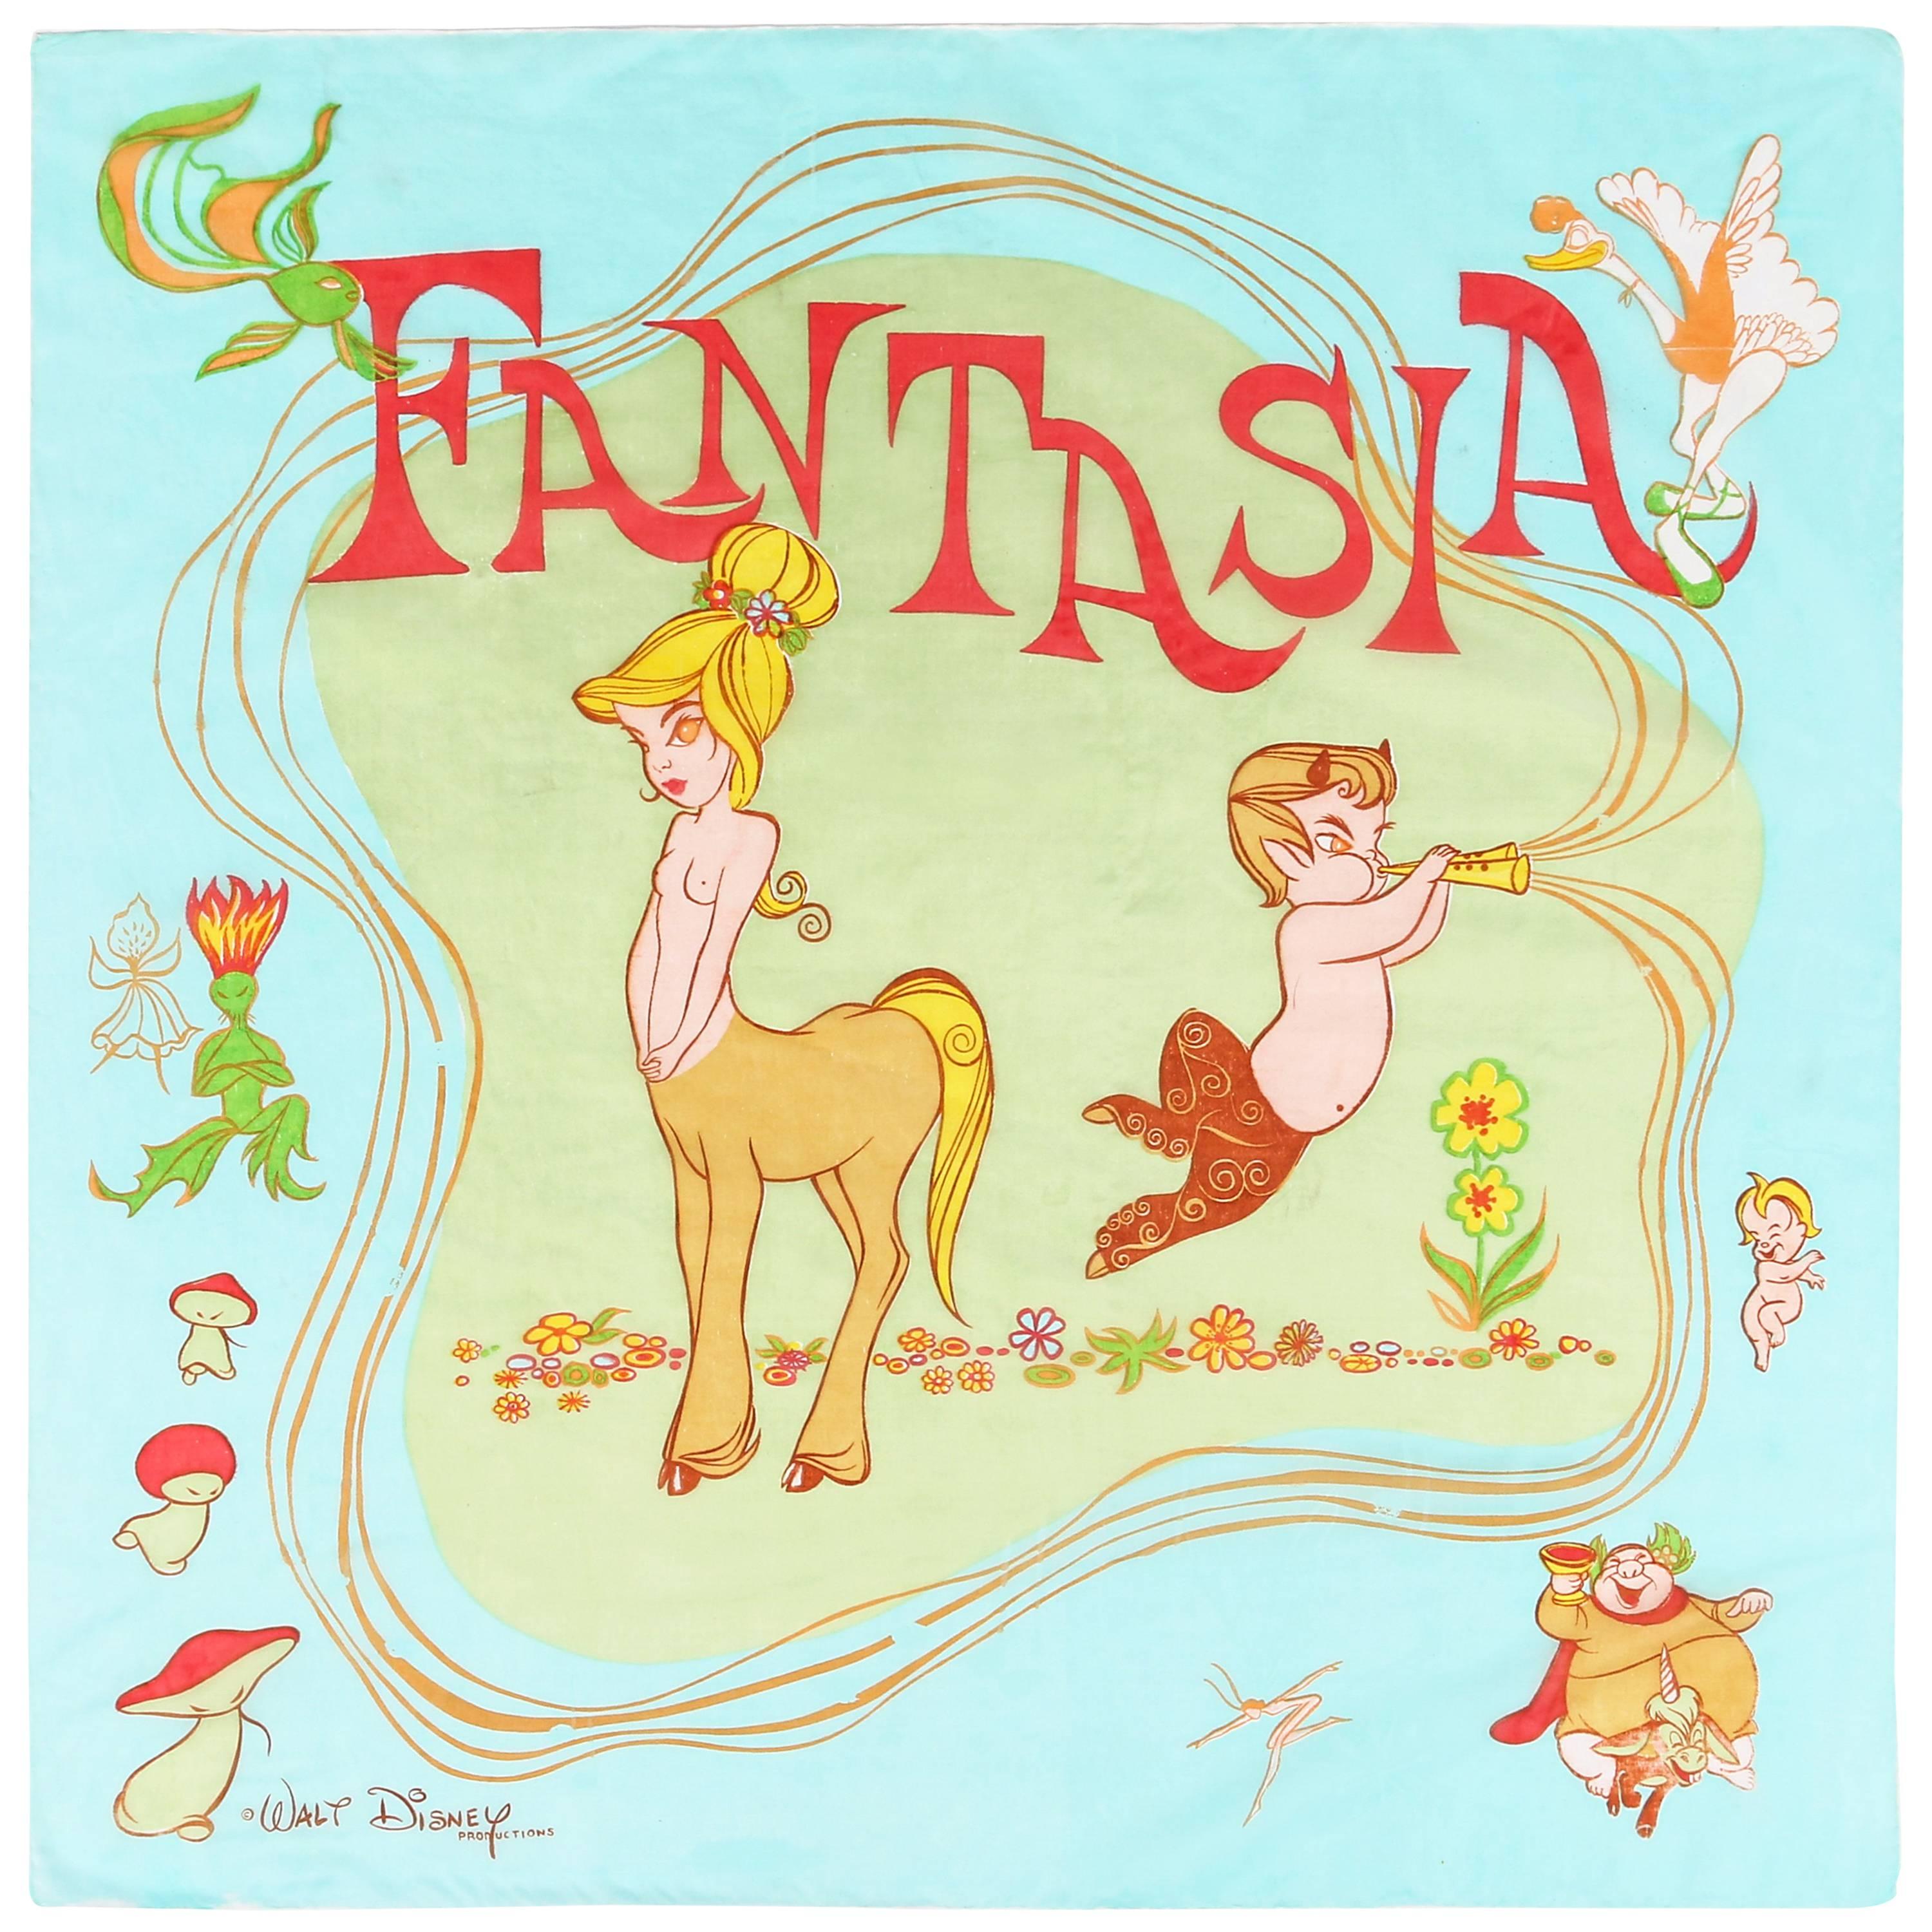 WALT DISNEY c.1940 "Fantasia" Topless Centaur Character Print Silk Chiffon Scarf